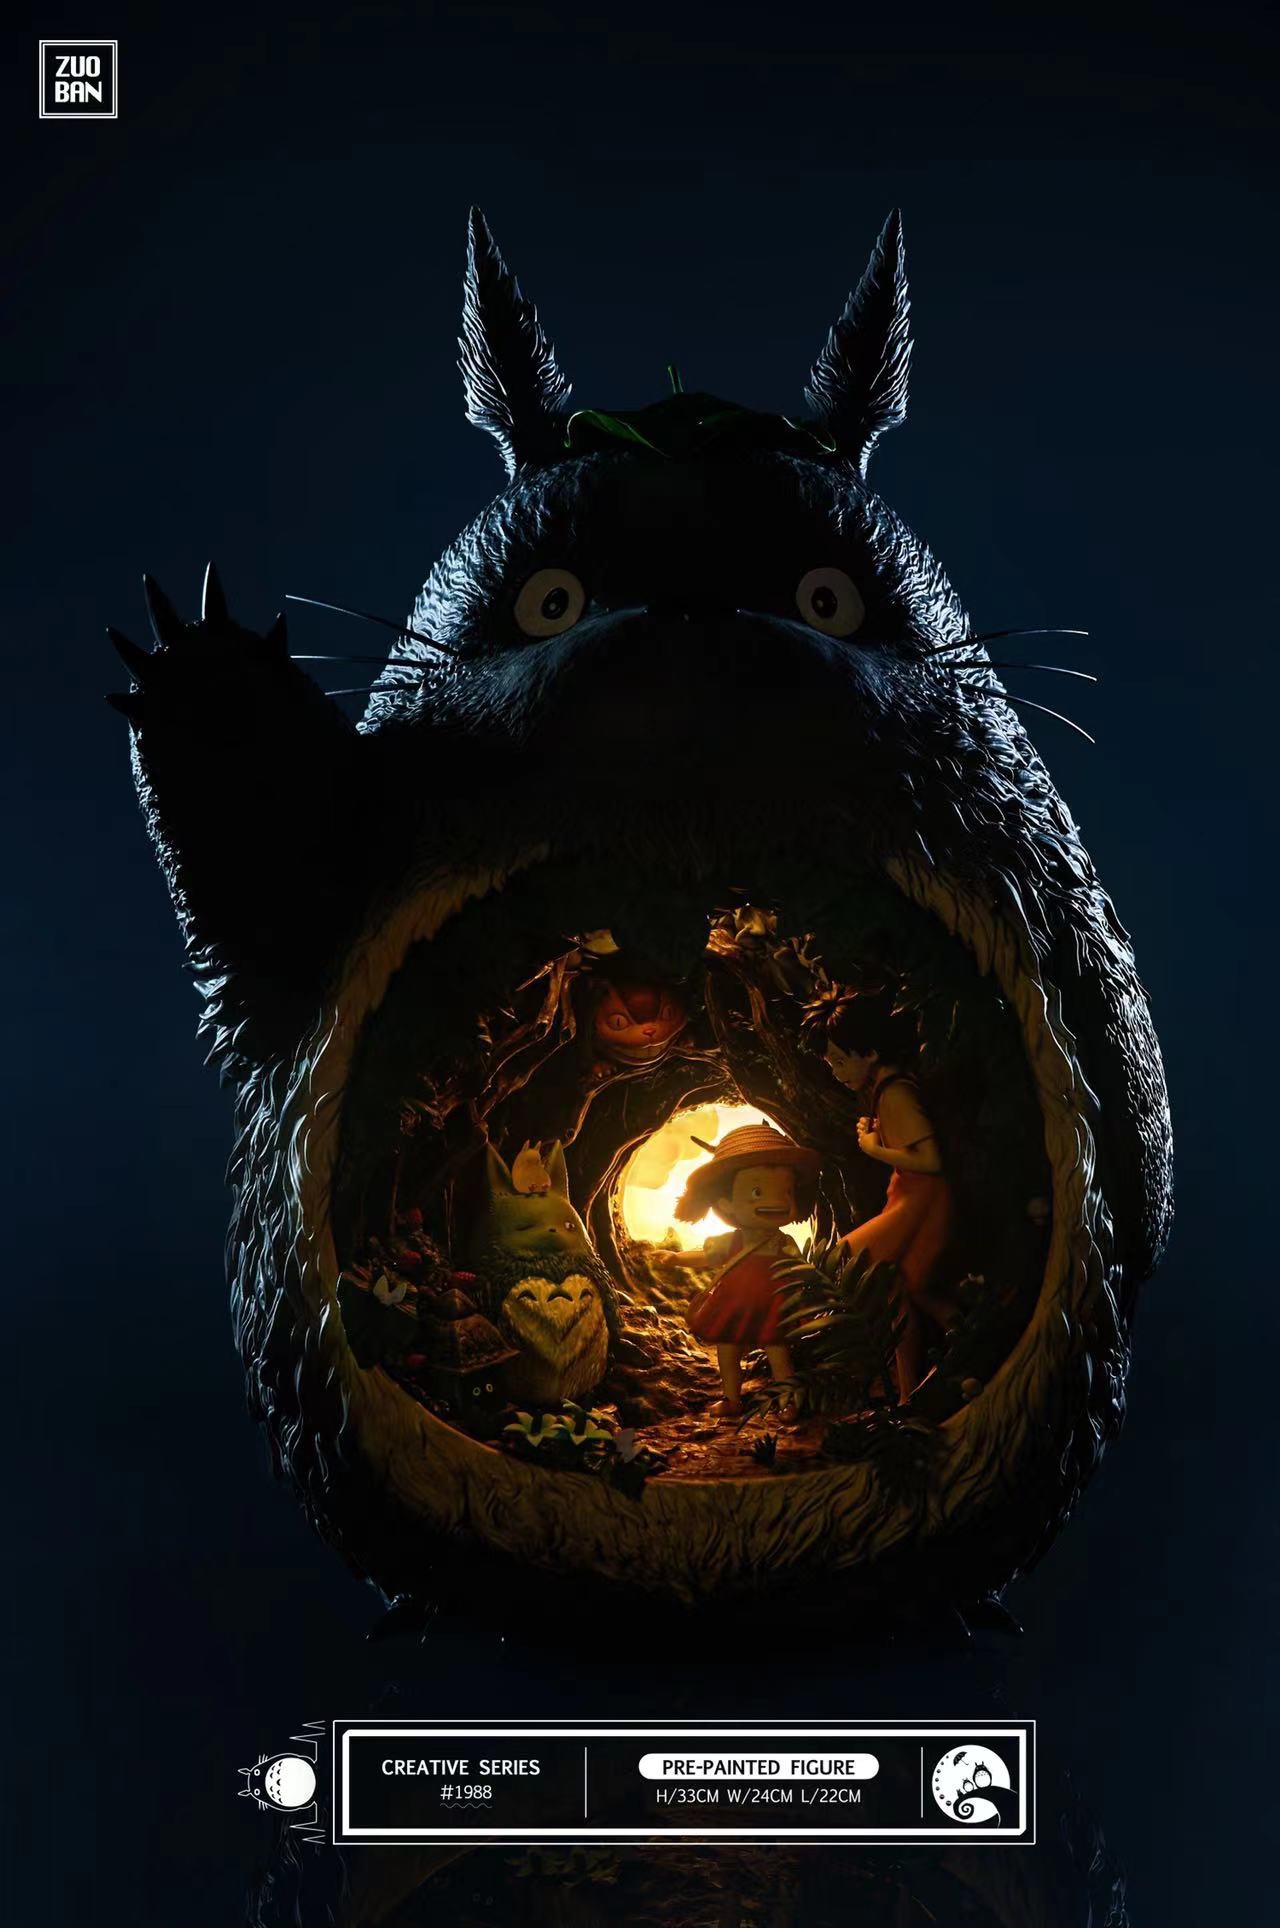 Totoro โทโทโร่ “ Studio Ghibli “ by Zuoban (มัดจำ) [[SOLD OUT]]